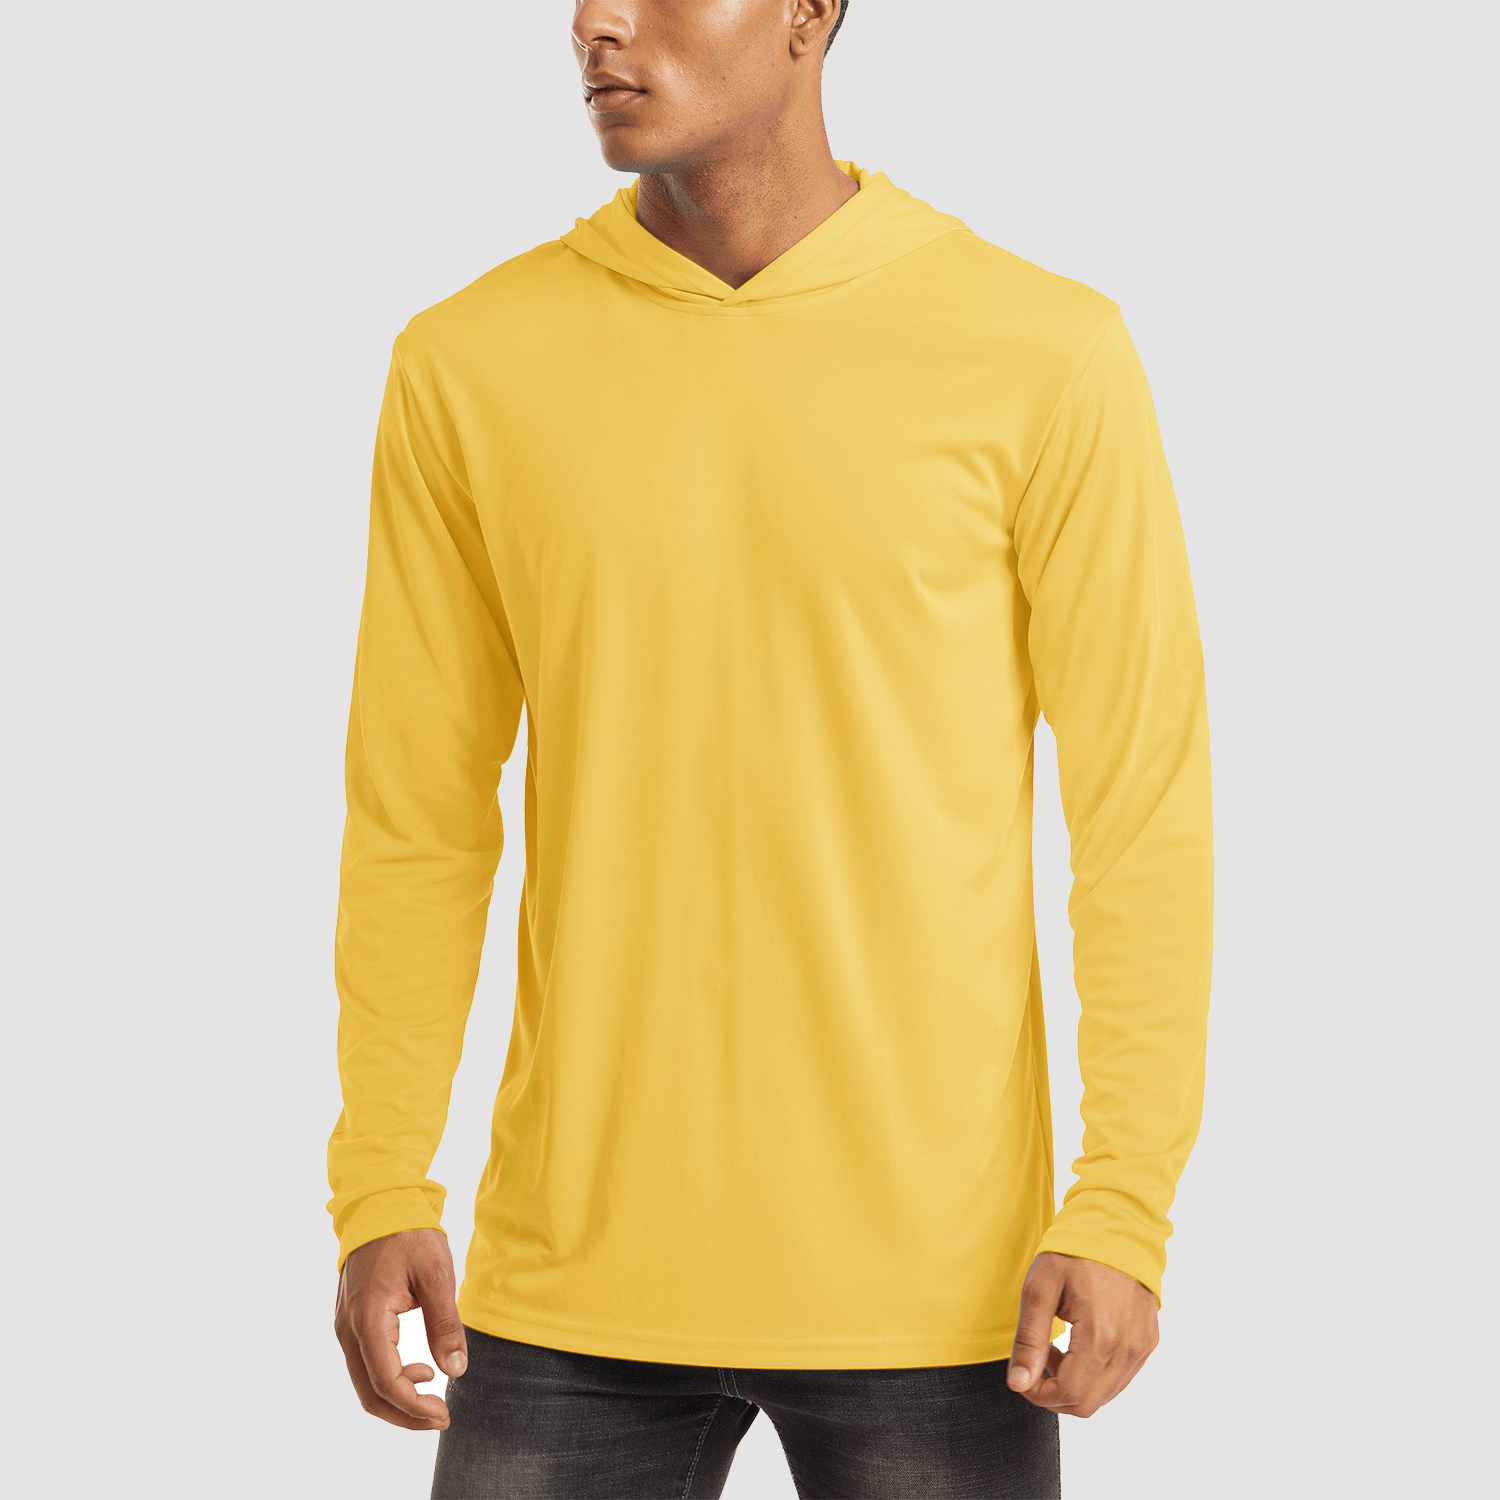 Buy 4 Get 4th Free】Men's Long Sleeve Hooded Shirt UPF 50+